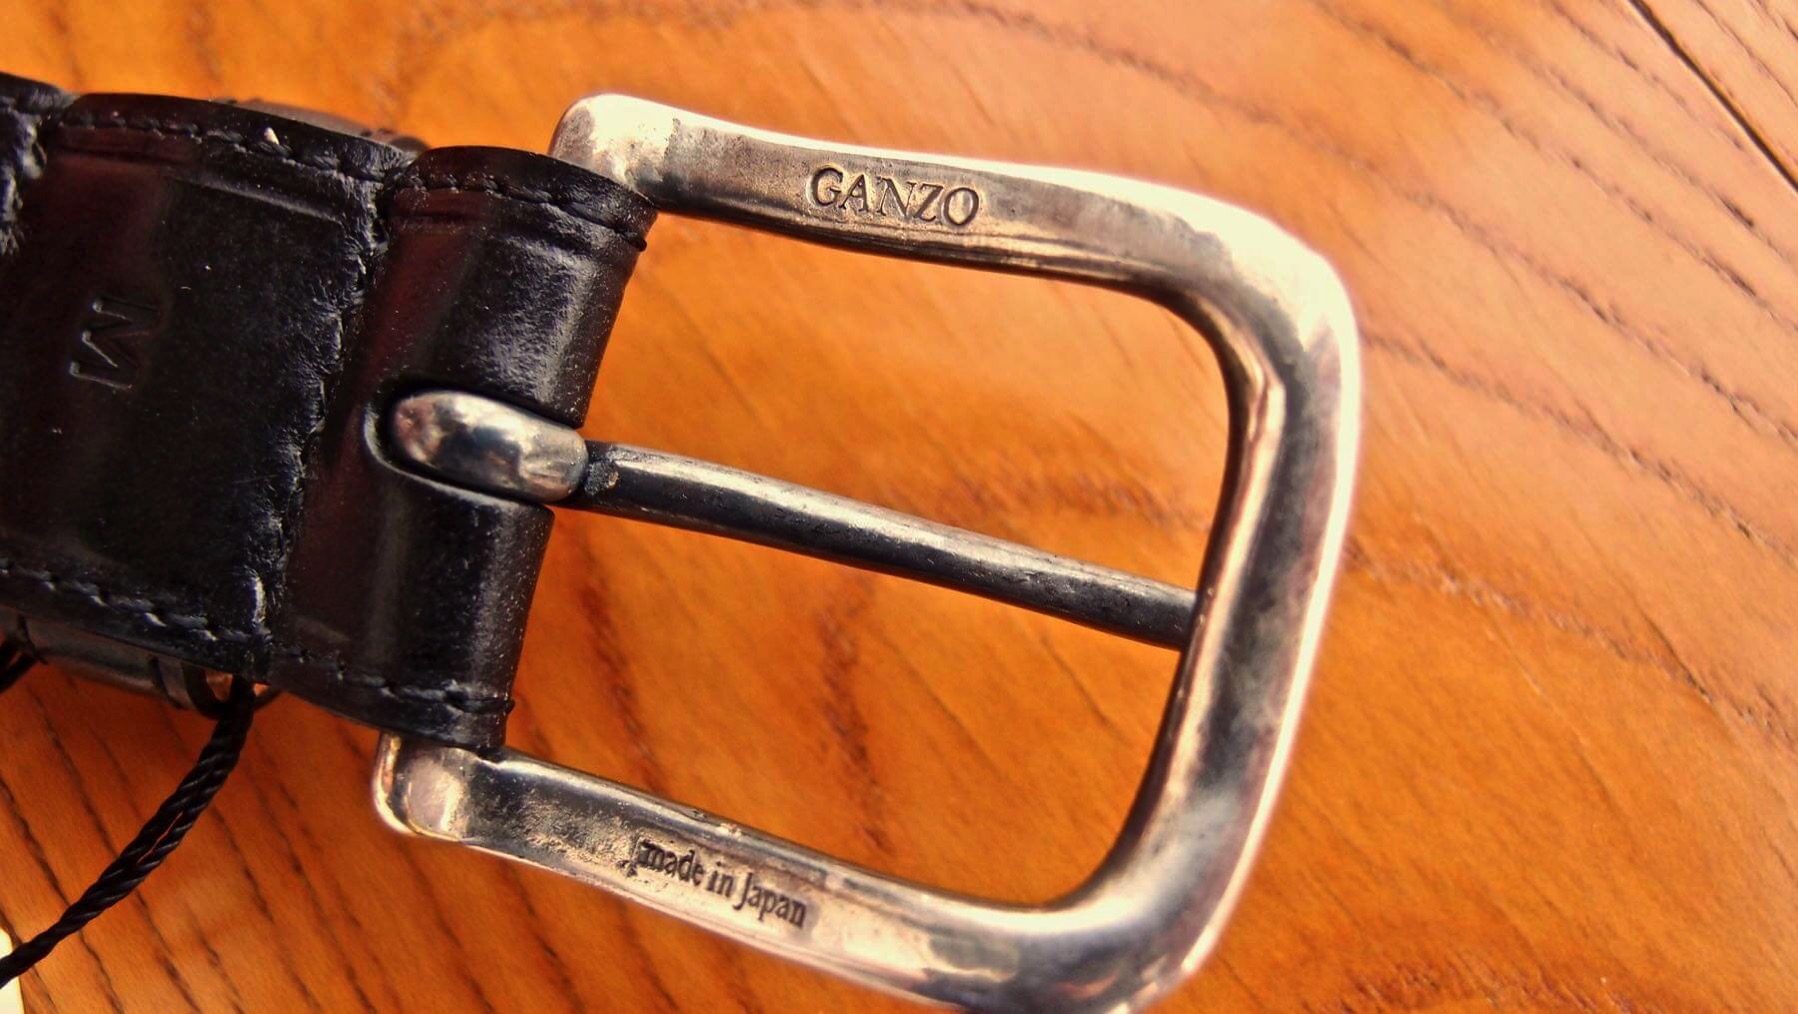 24 Ganzo leather belt BRIDLE